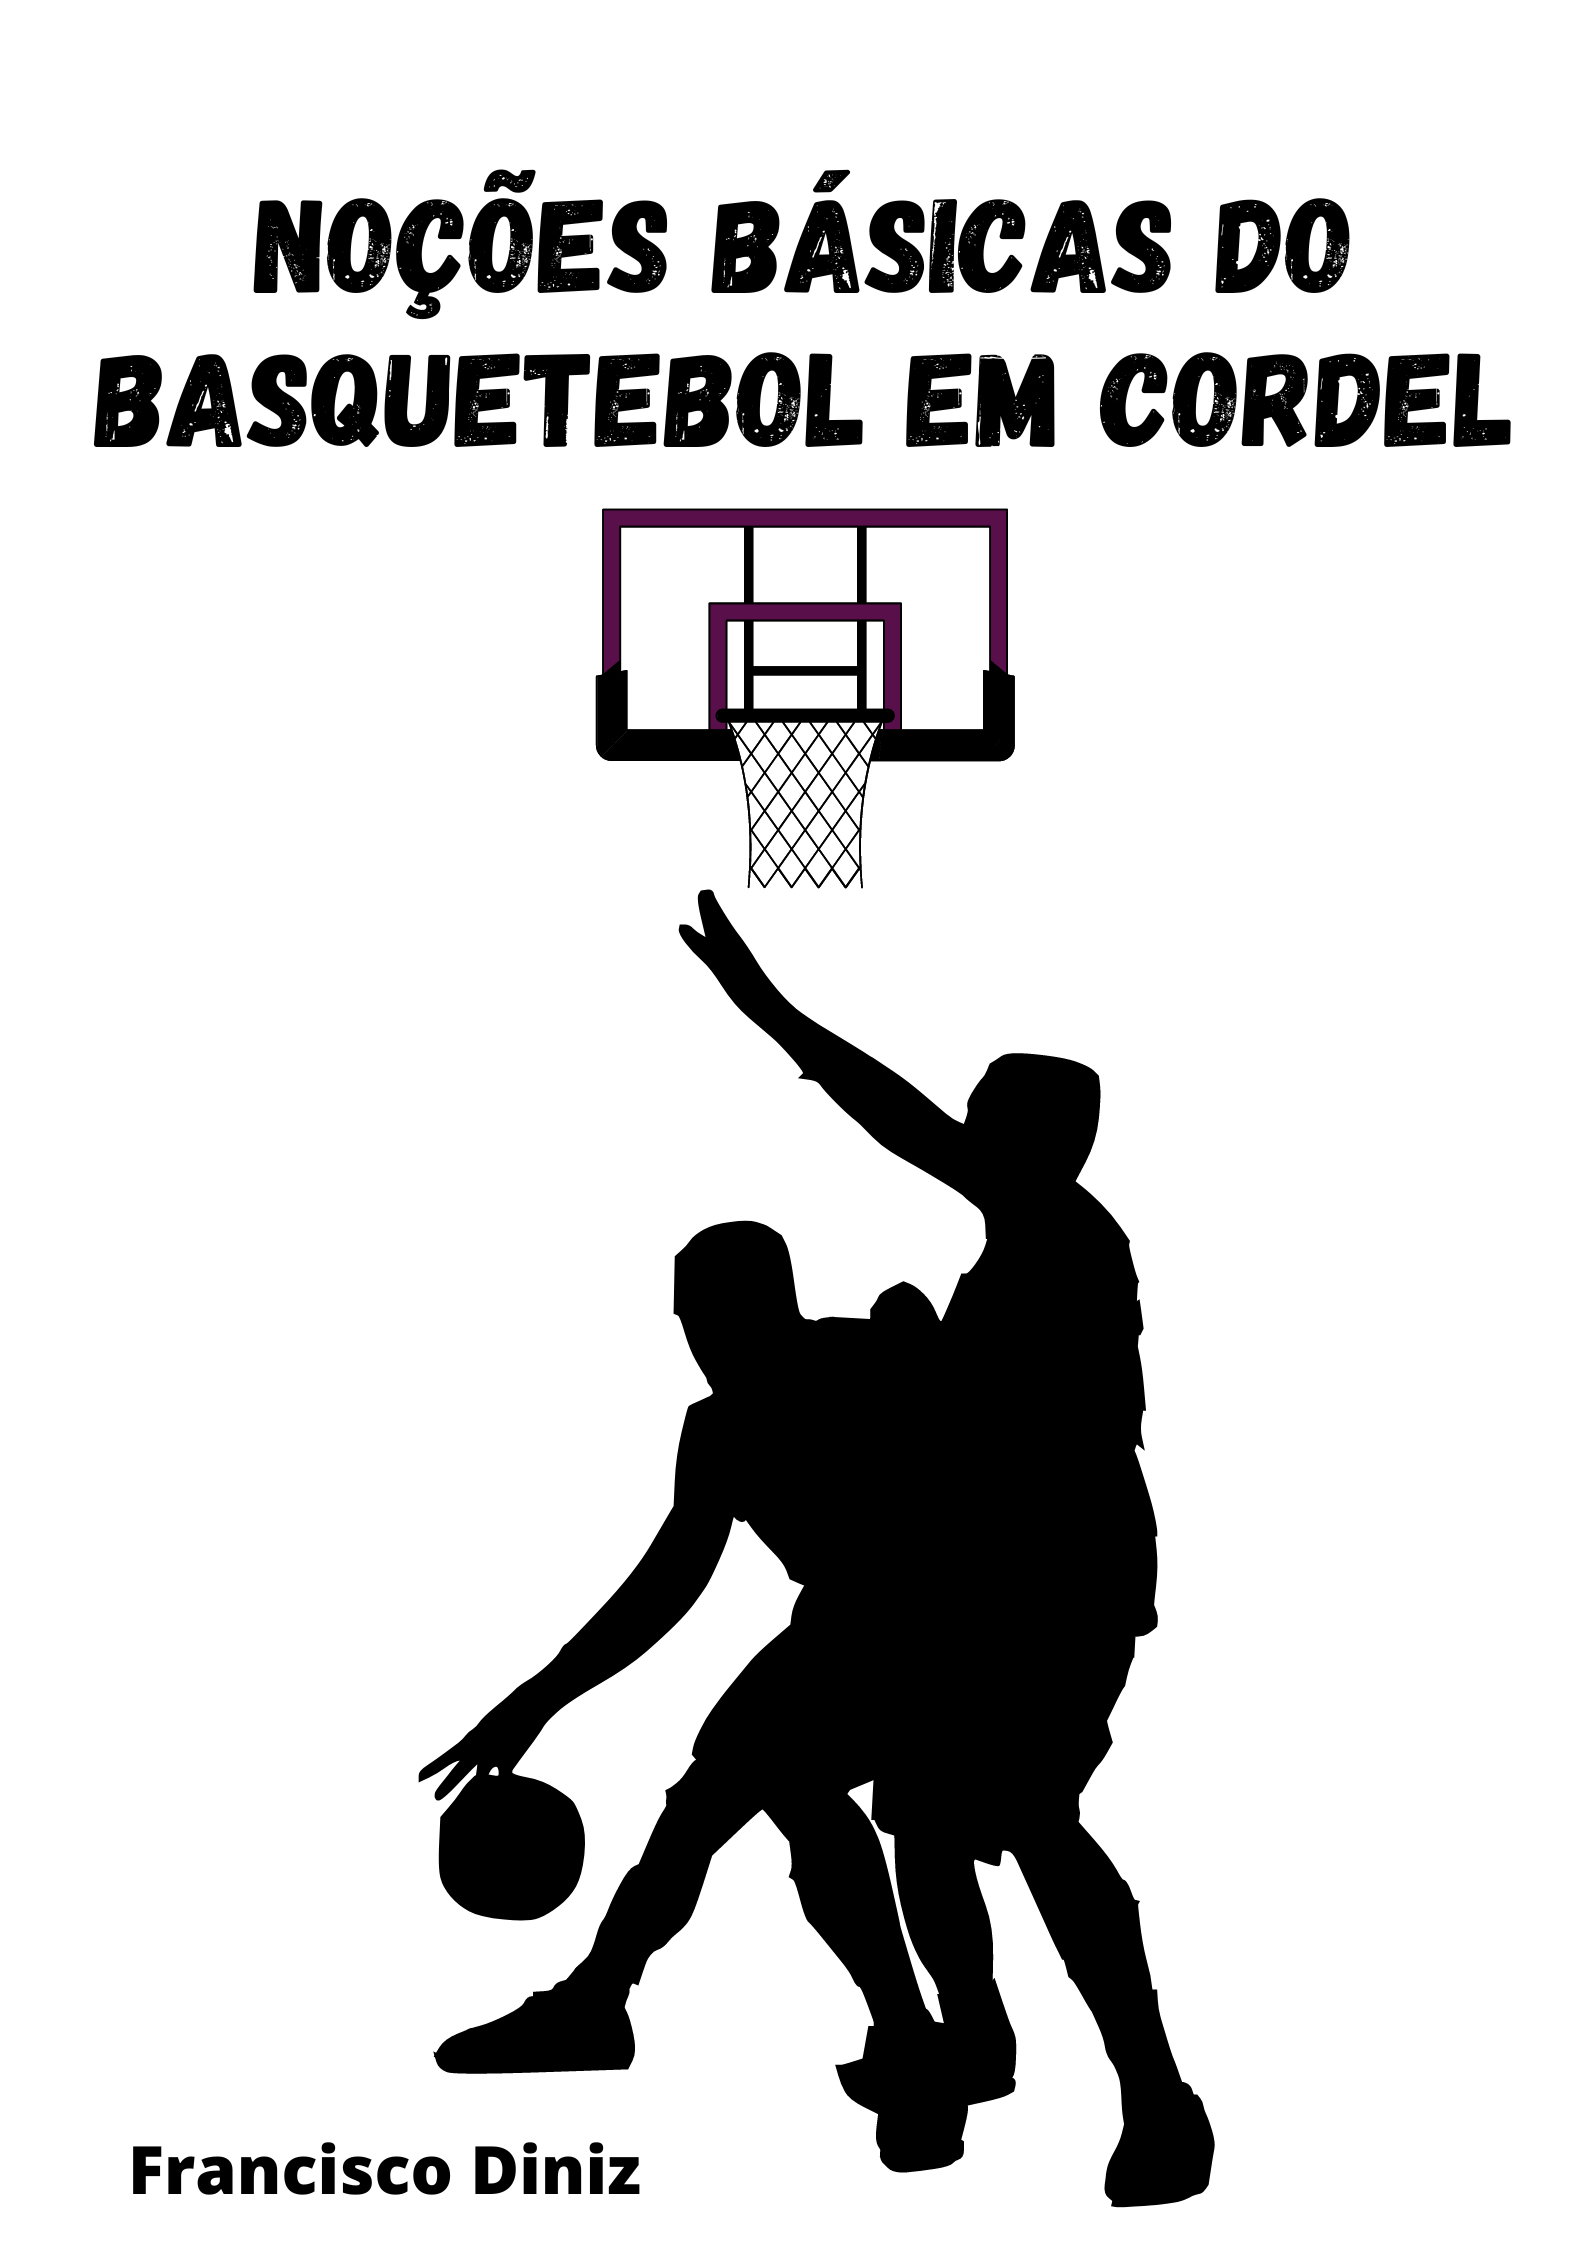 www.projetocordel.com.br